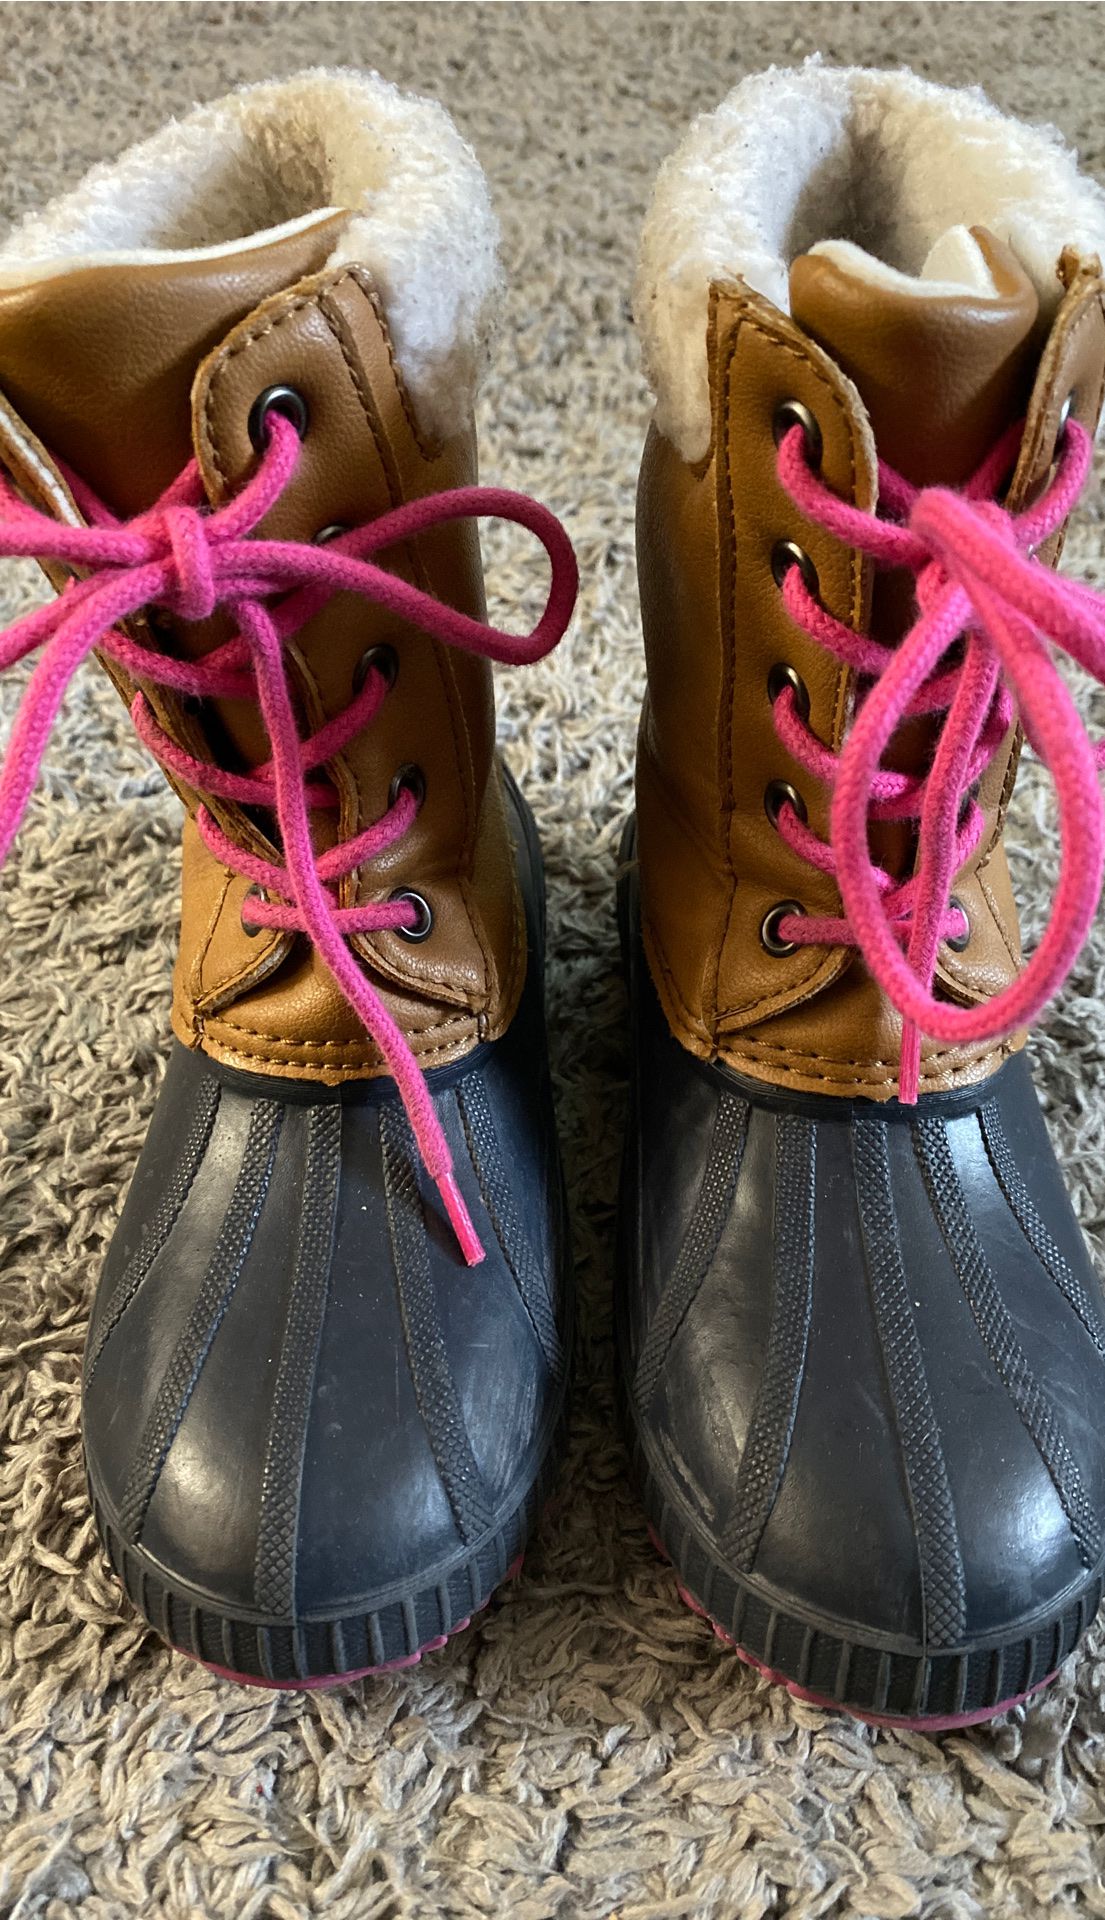 Gap girl boots